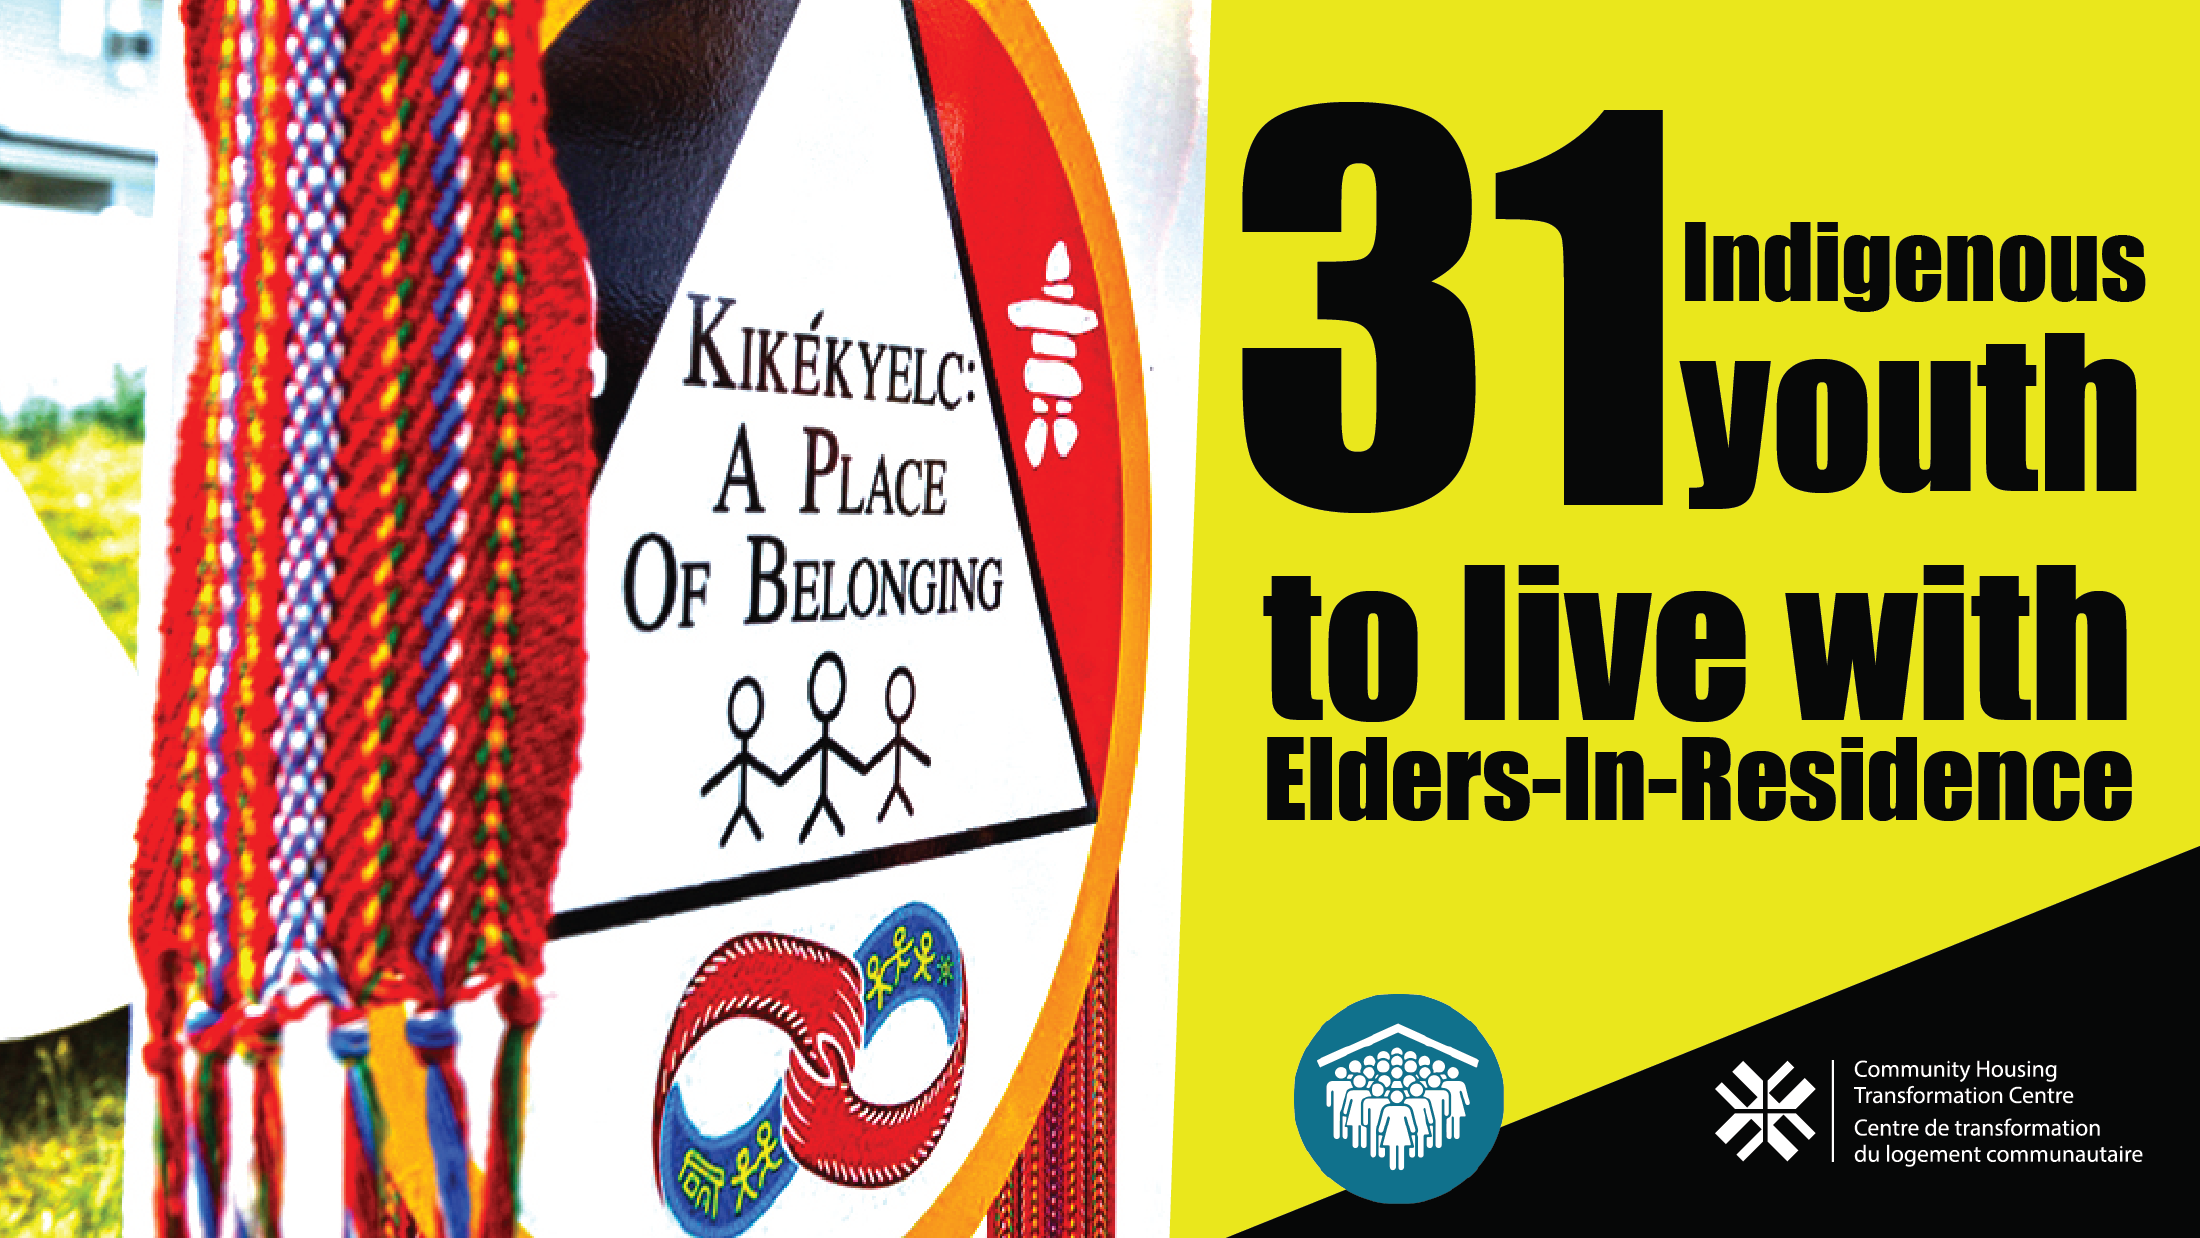 Elders-In-Residence program at Kikékyelc: A place of belonging